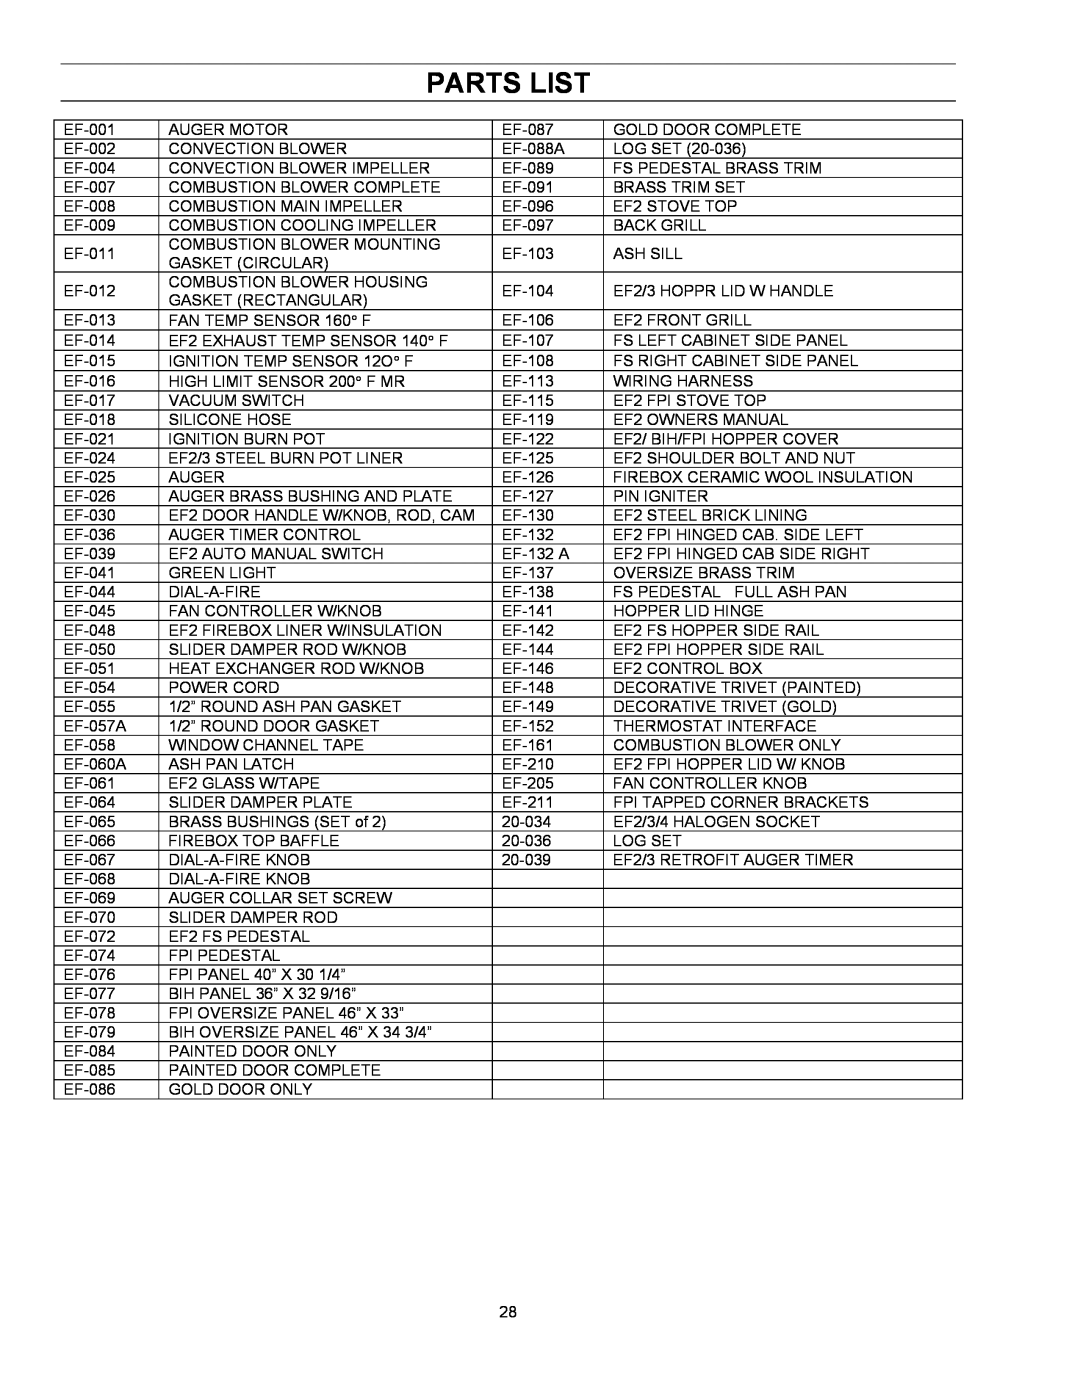 Enviro EF-II I technical manual Parts List 